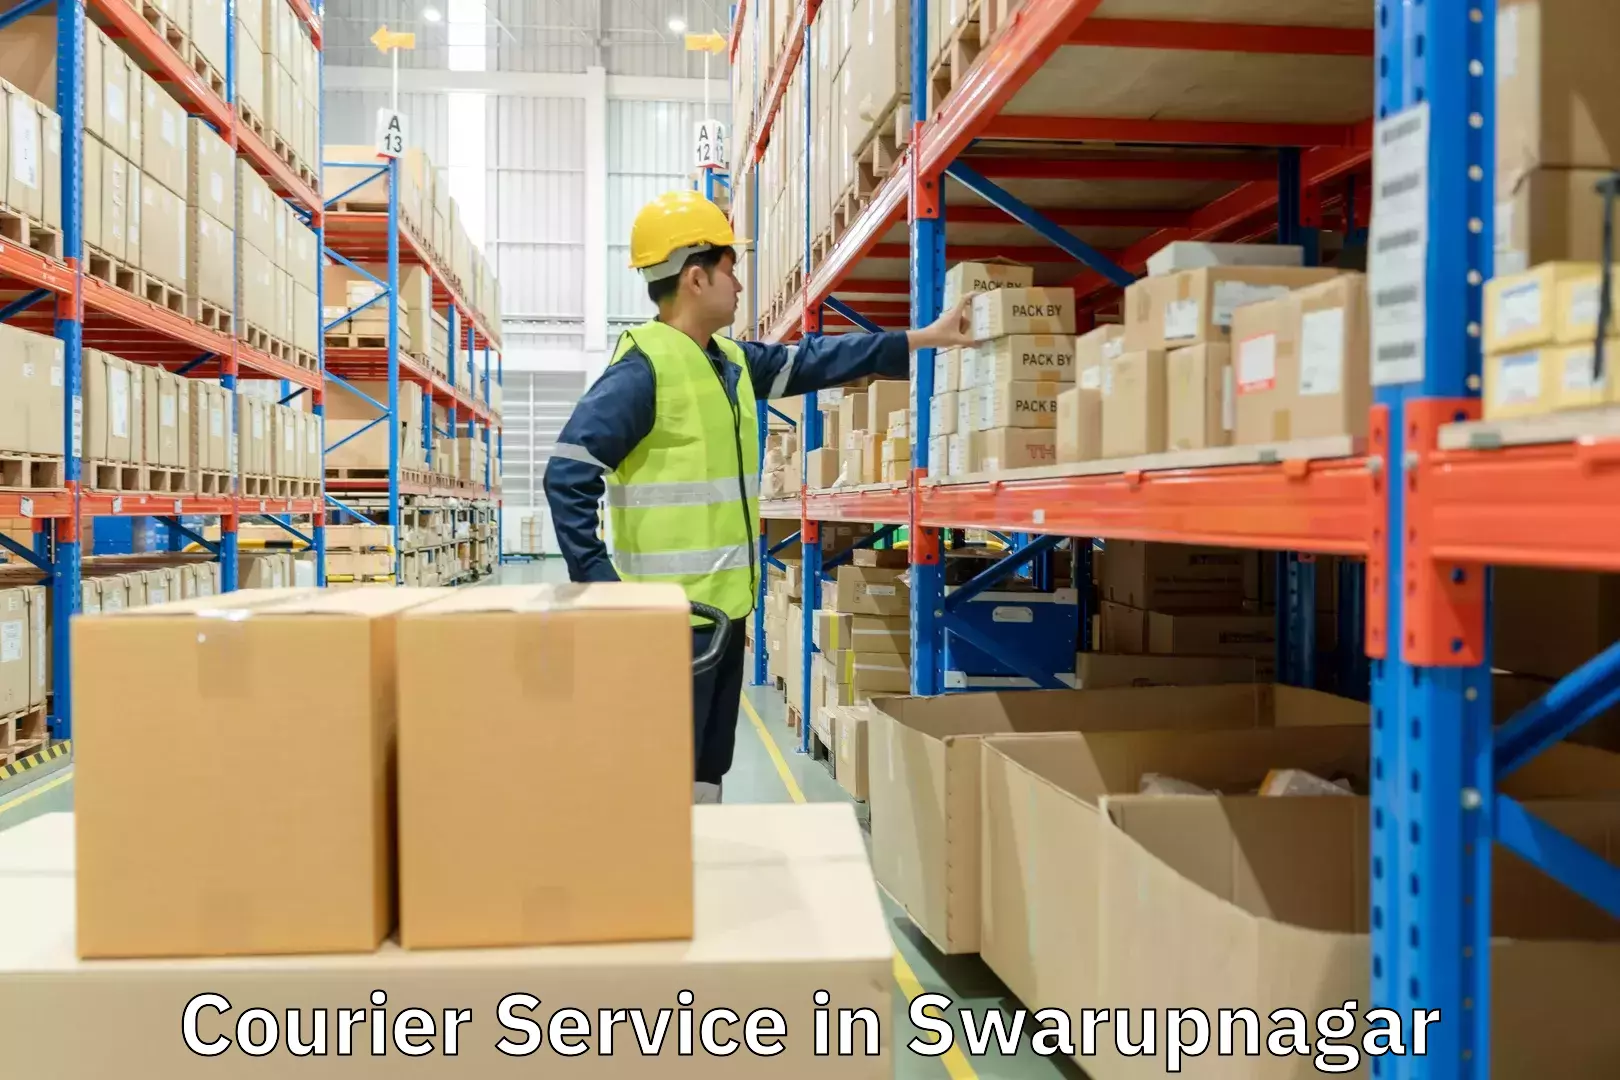 Postal and courier services in Swarupnagar